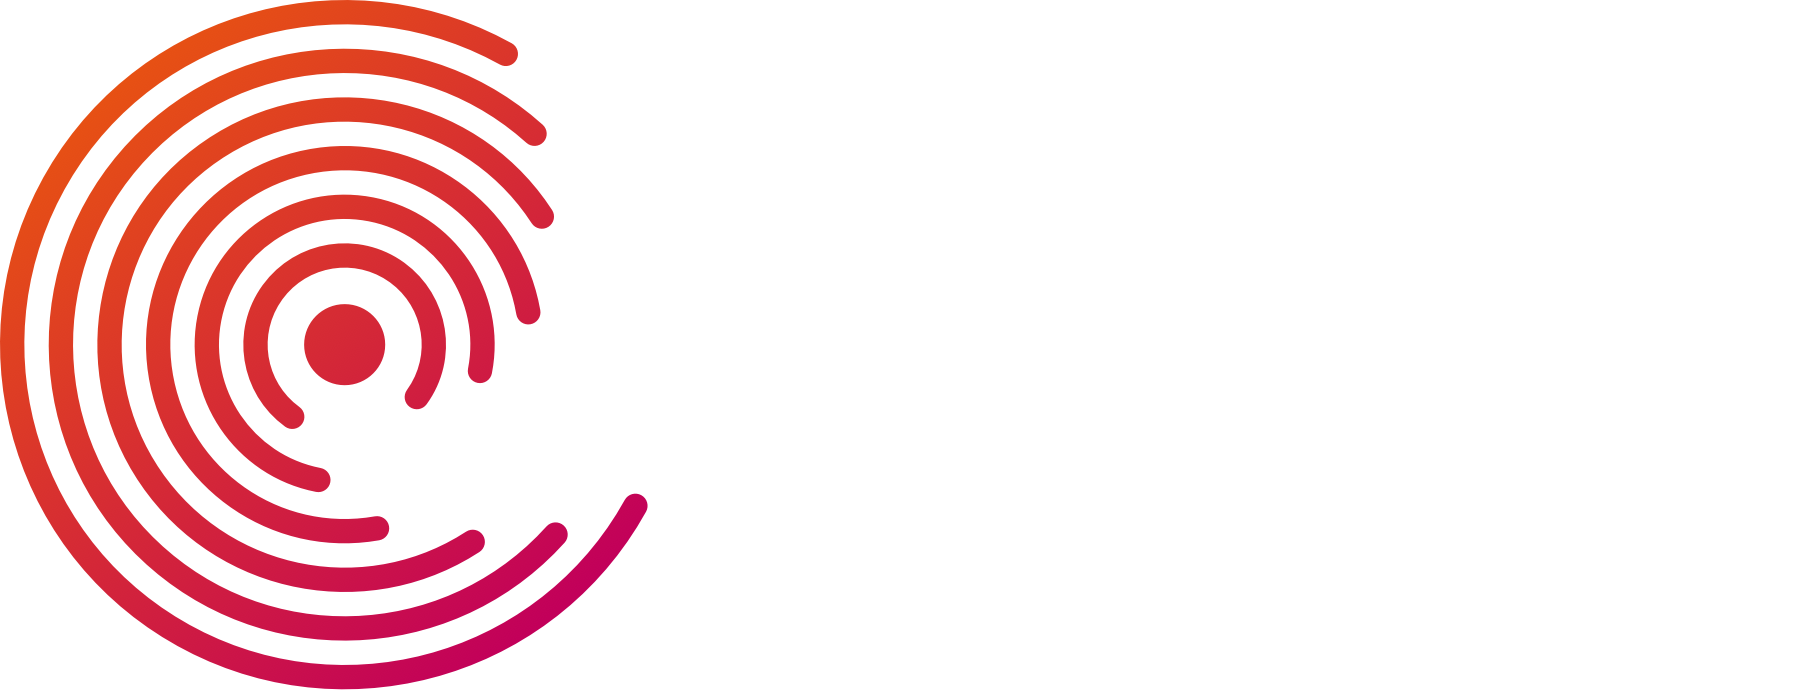 IRIS by Argon & Co